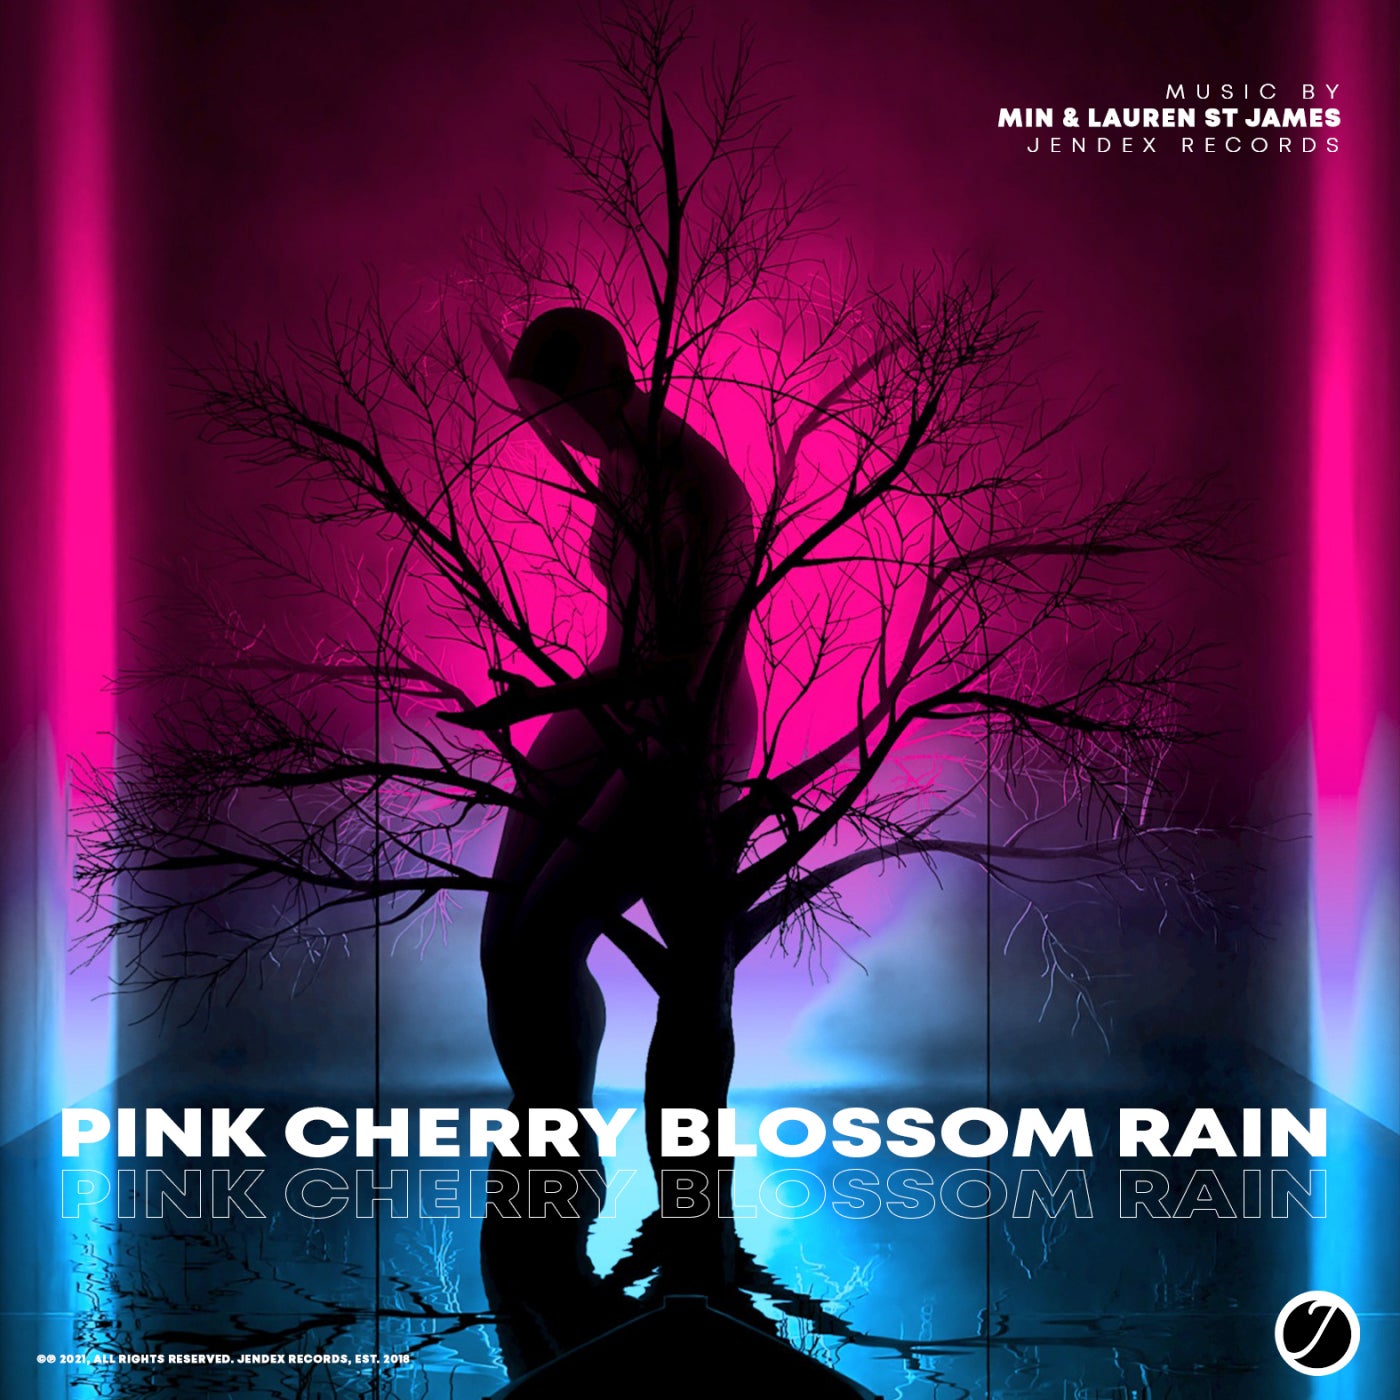 Pink Cherry Blossom Rain